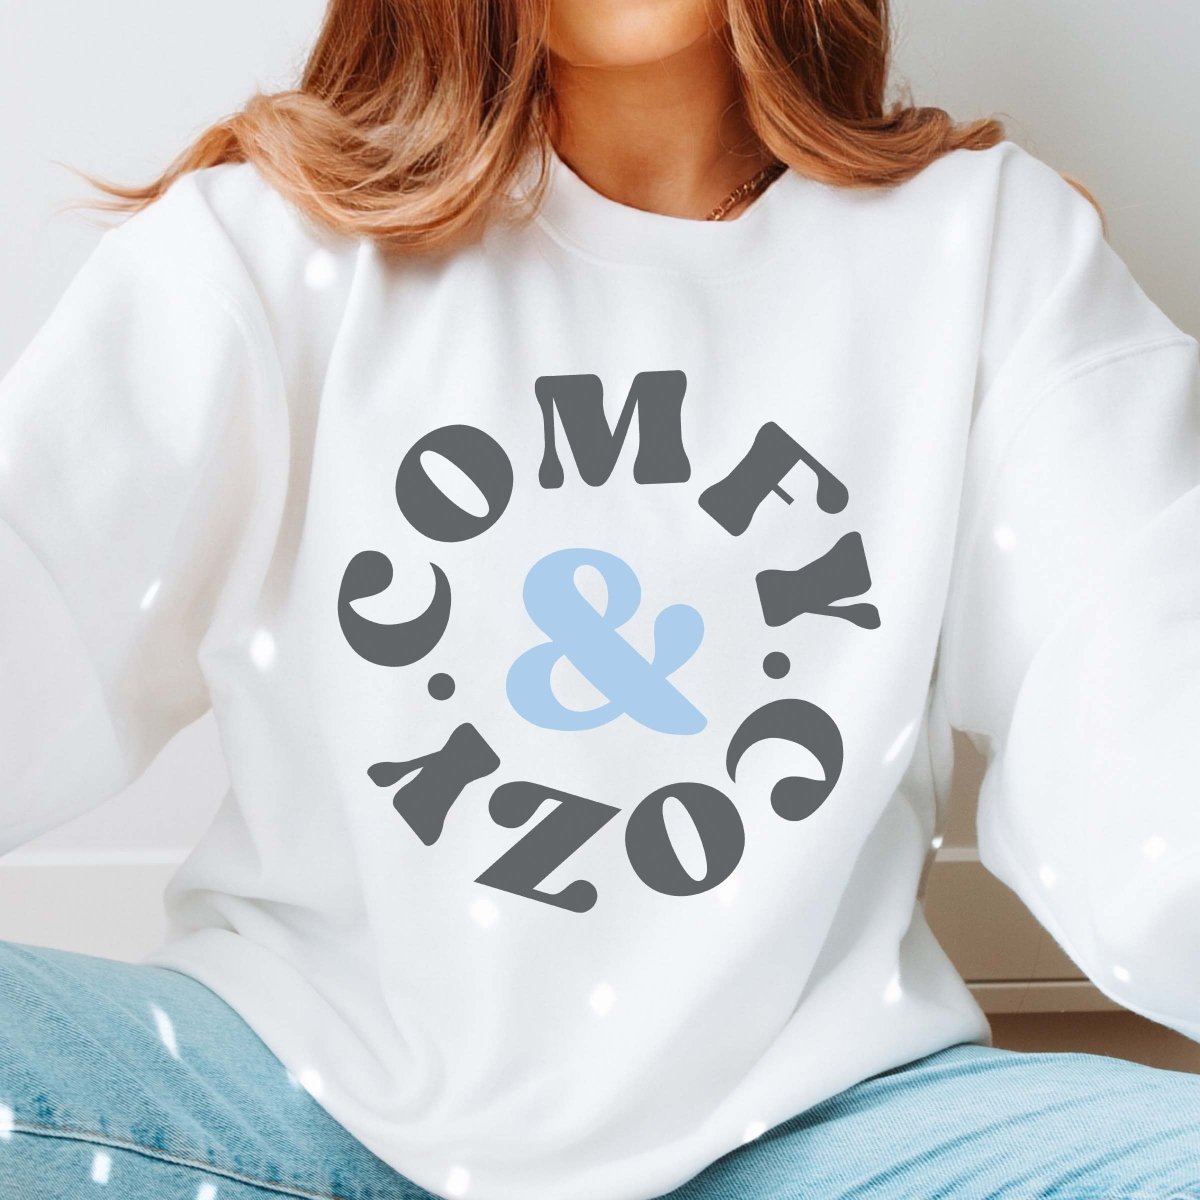 Comfy &amp; Cozy Wholesale Bella Crew Sweatshirt - Limeberry Designs